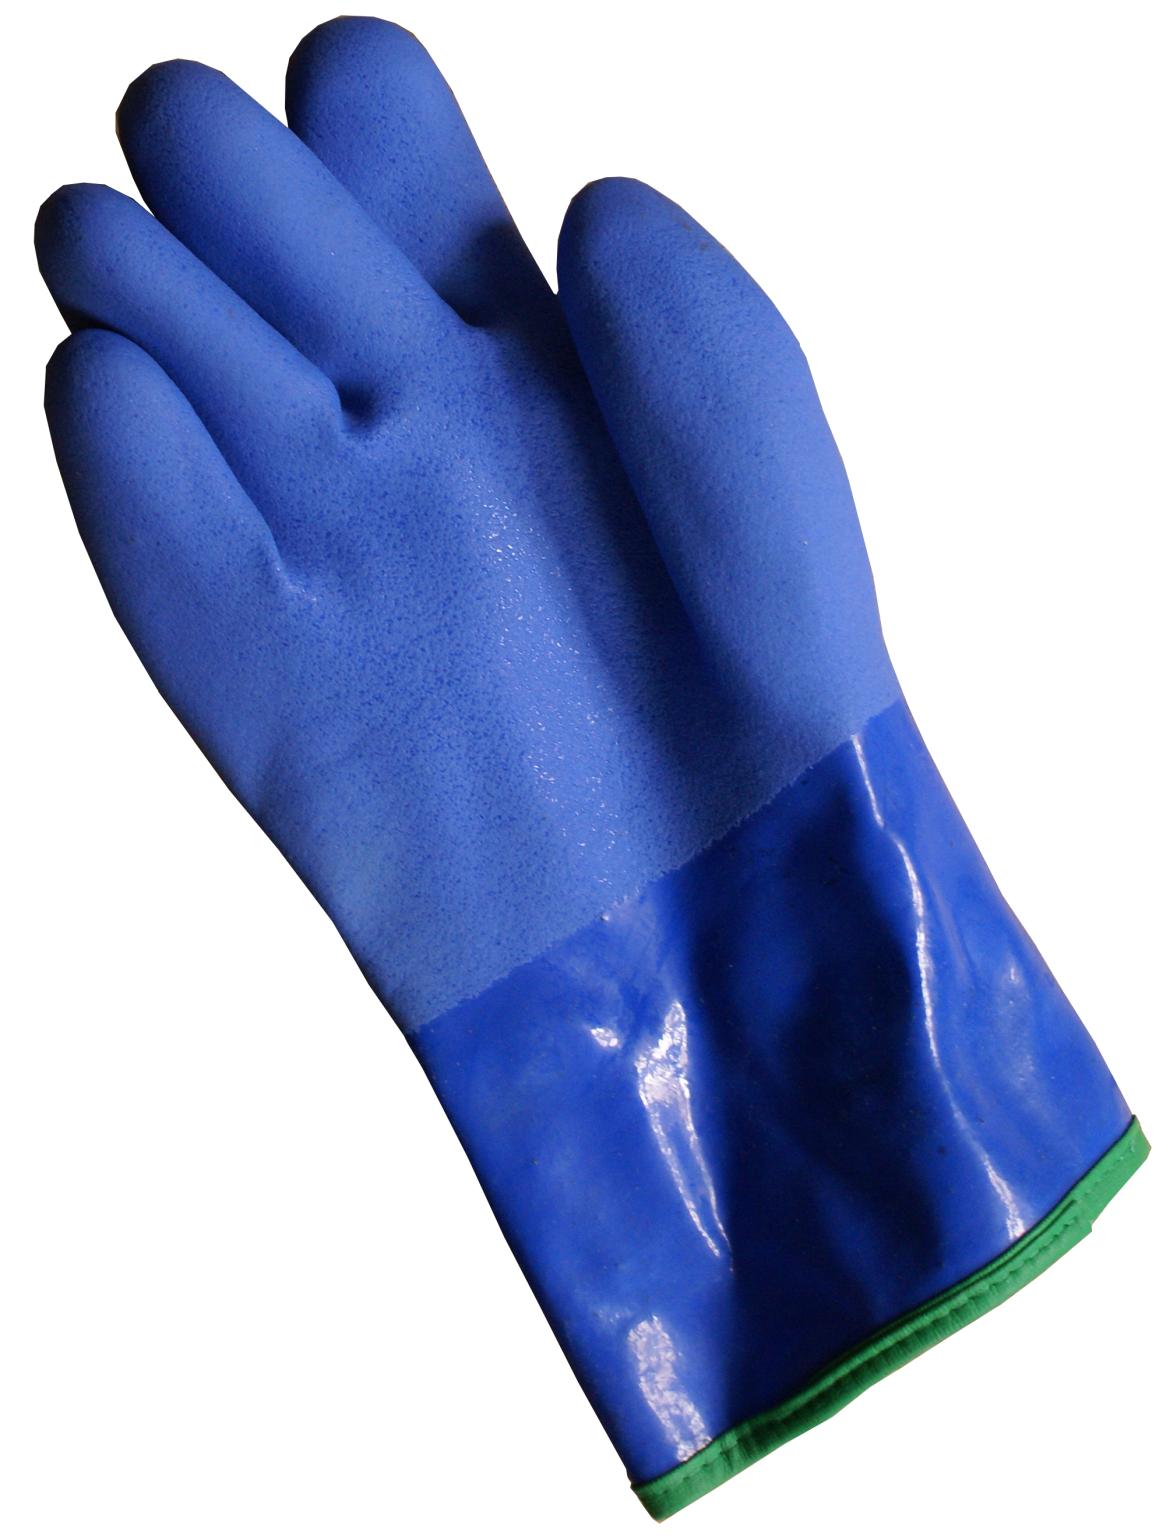 Dry glove